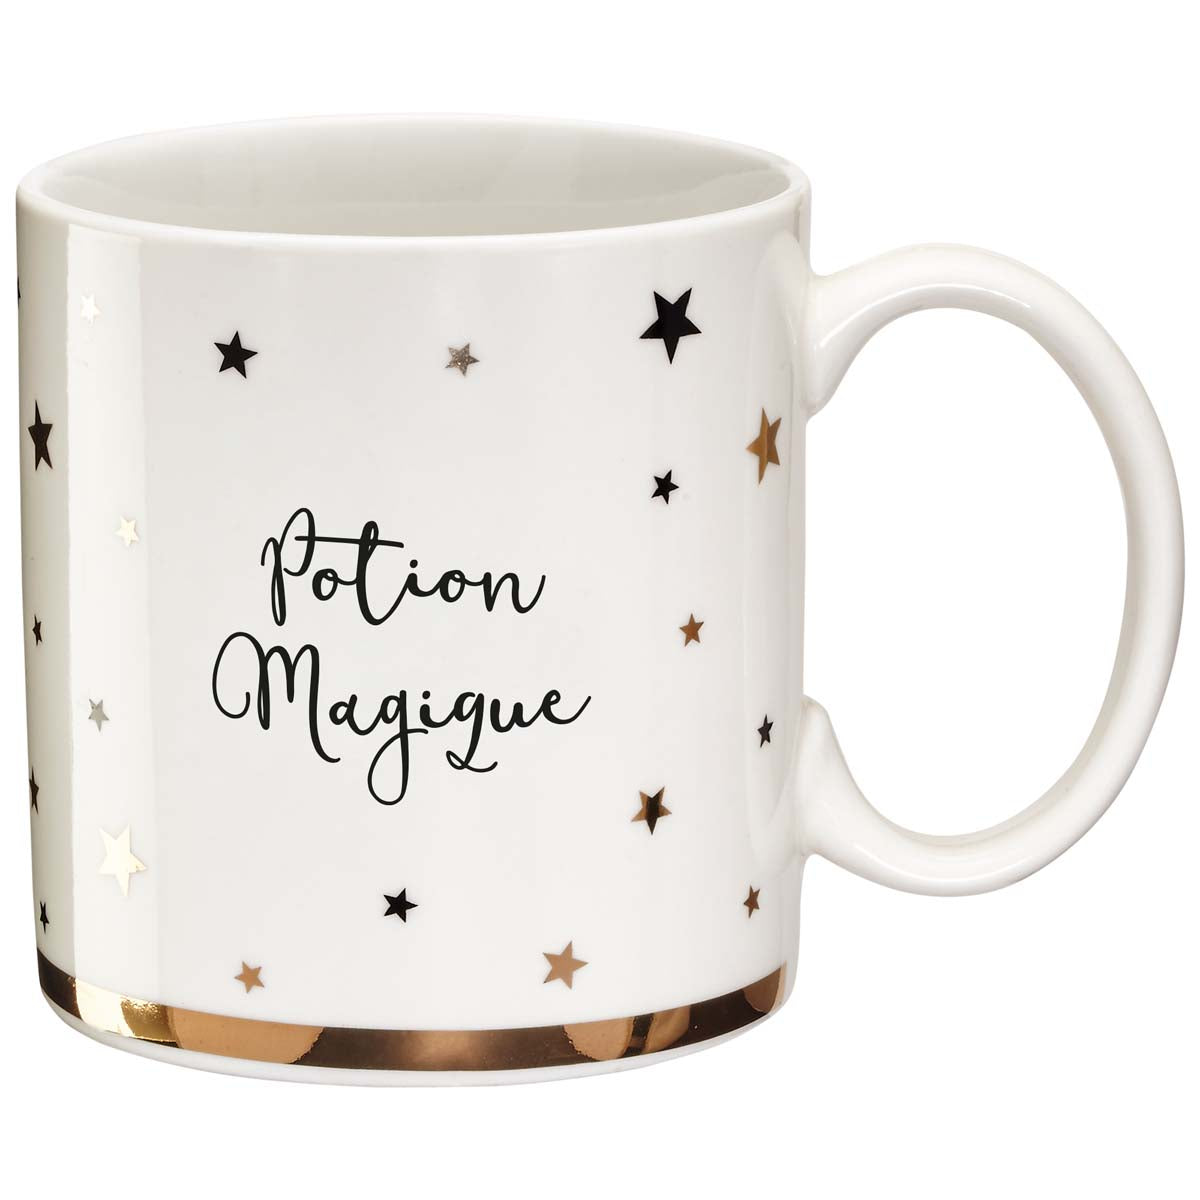 Magic potion gift mug